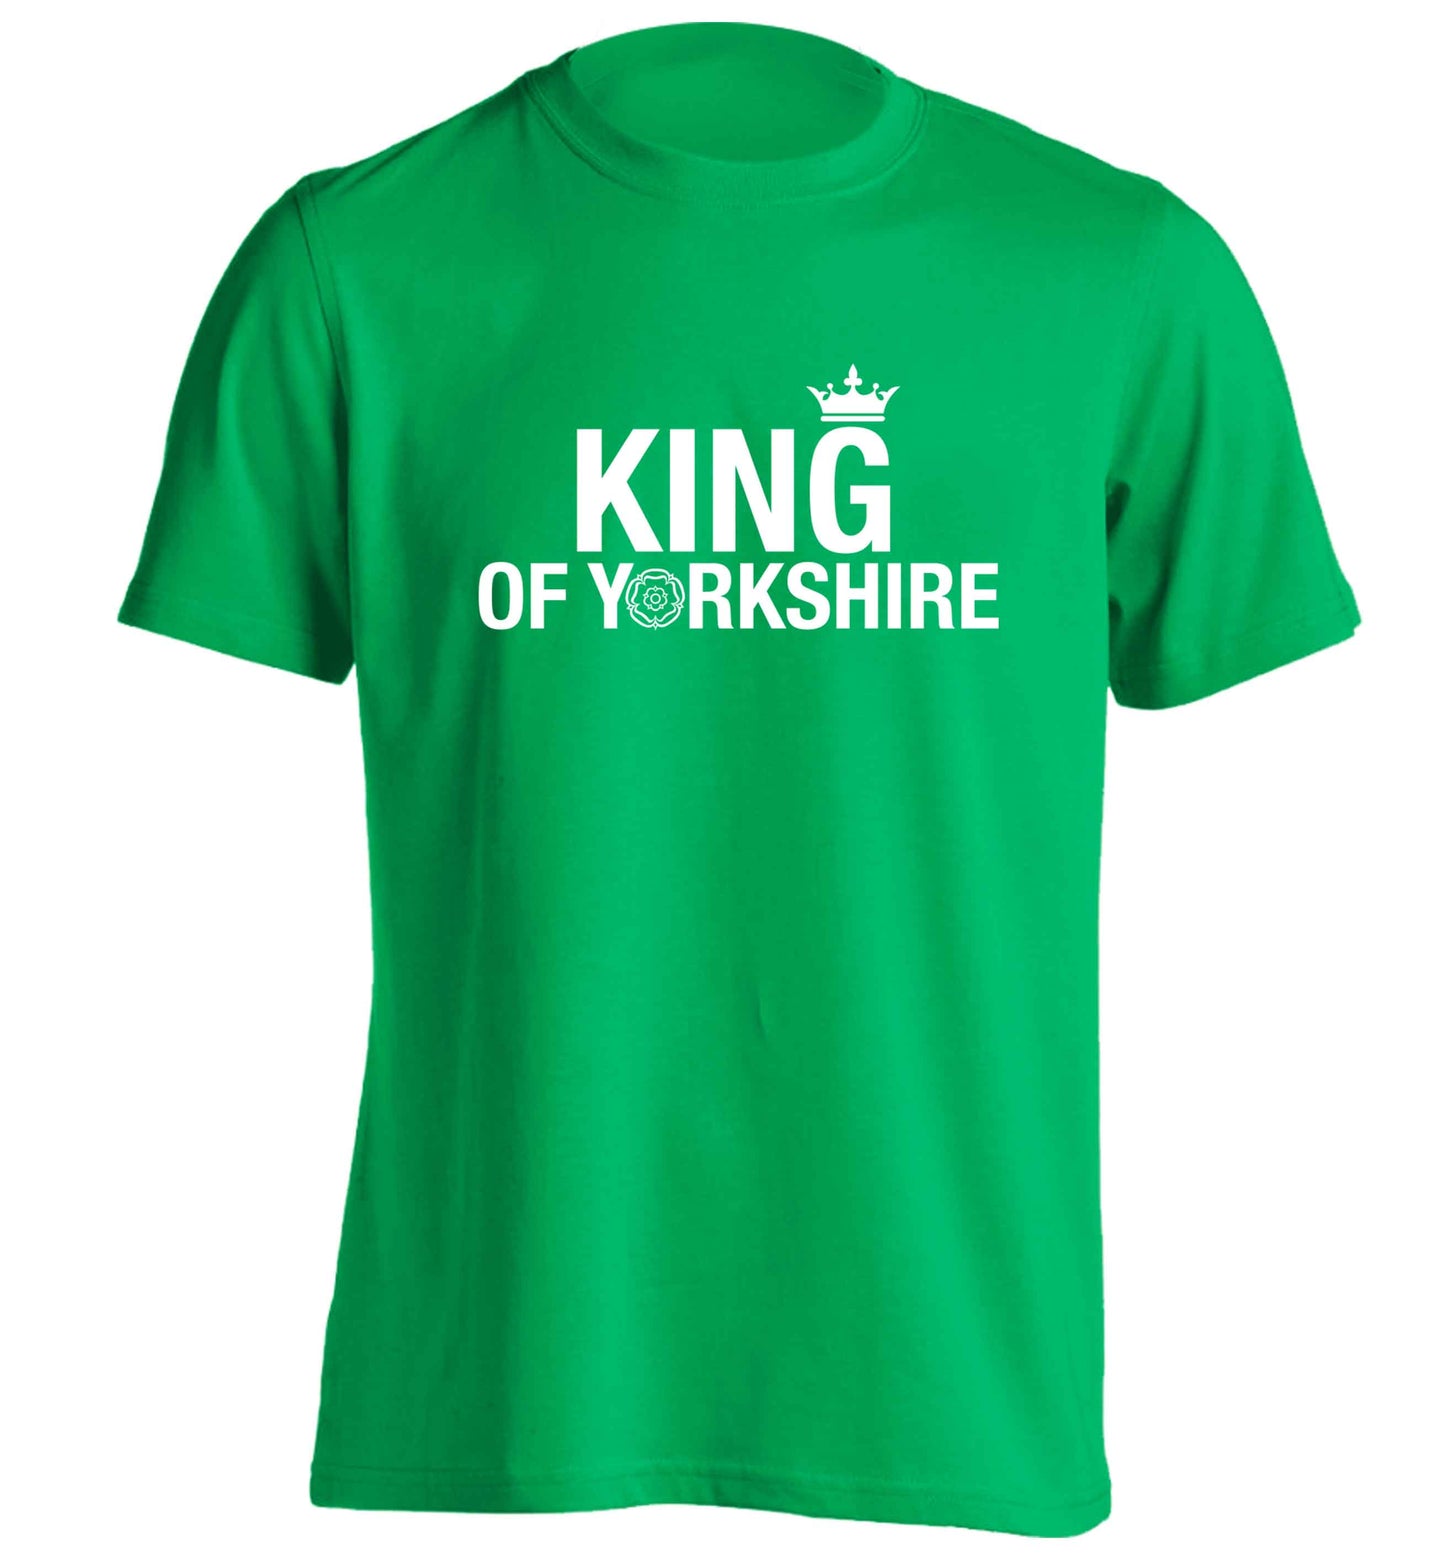 King of Yorkshire adults unisex green Tshirt 2XL